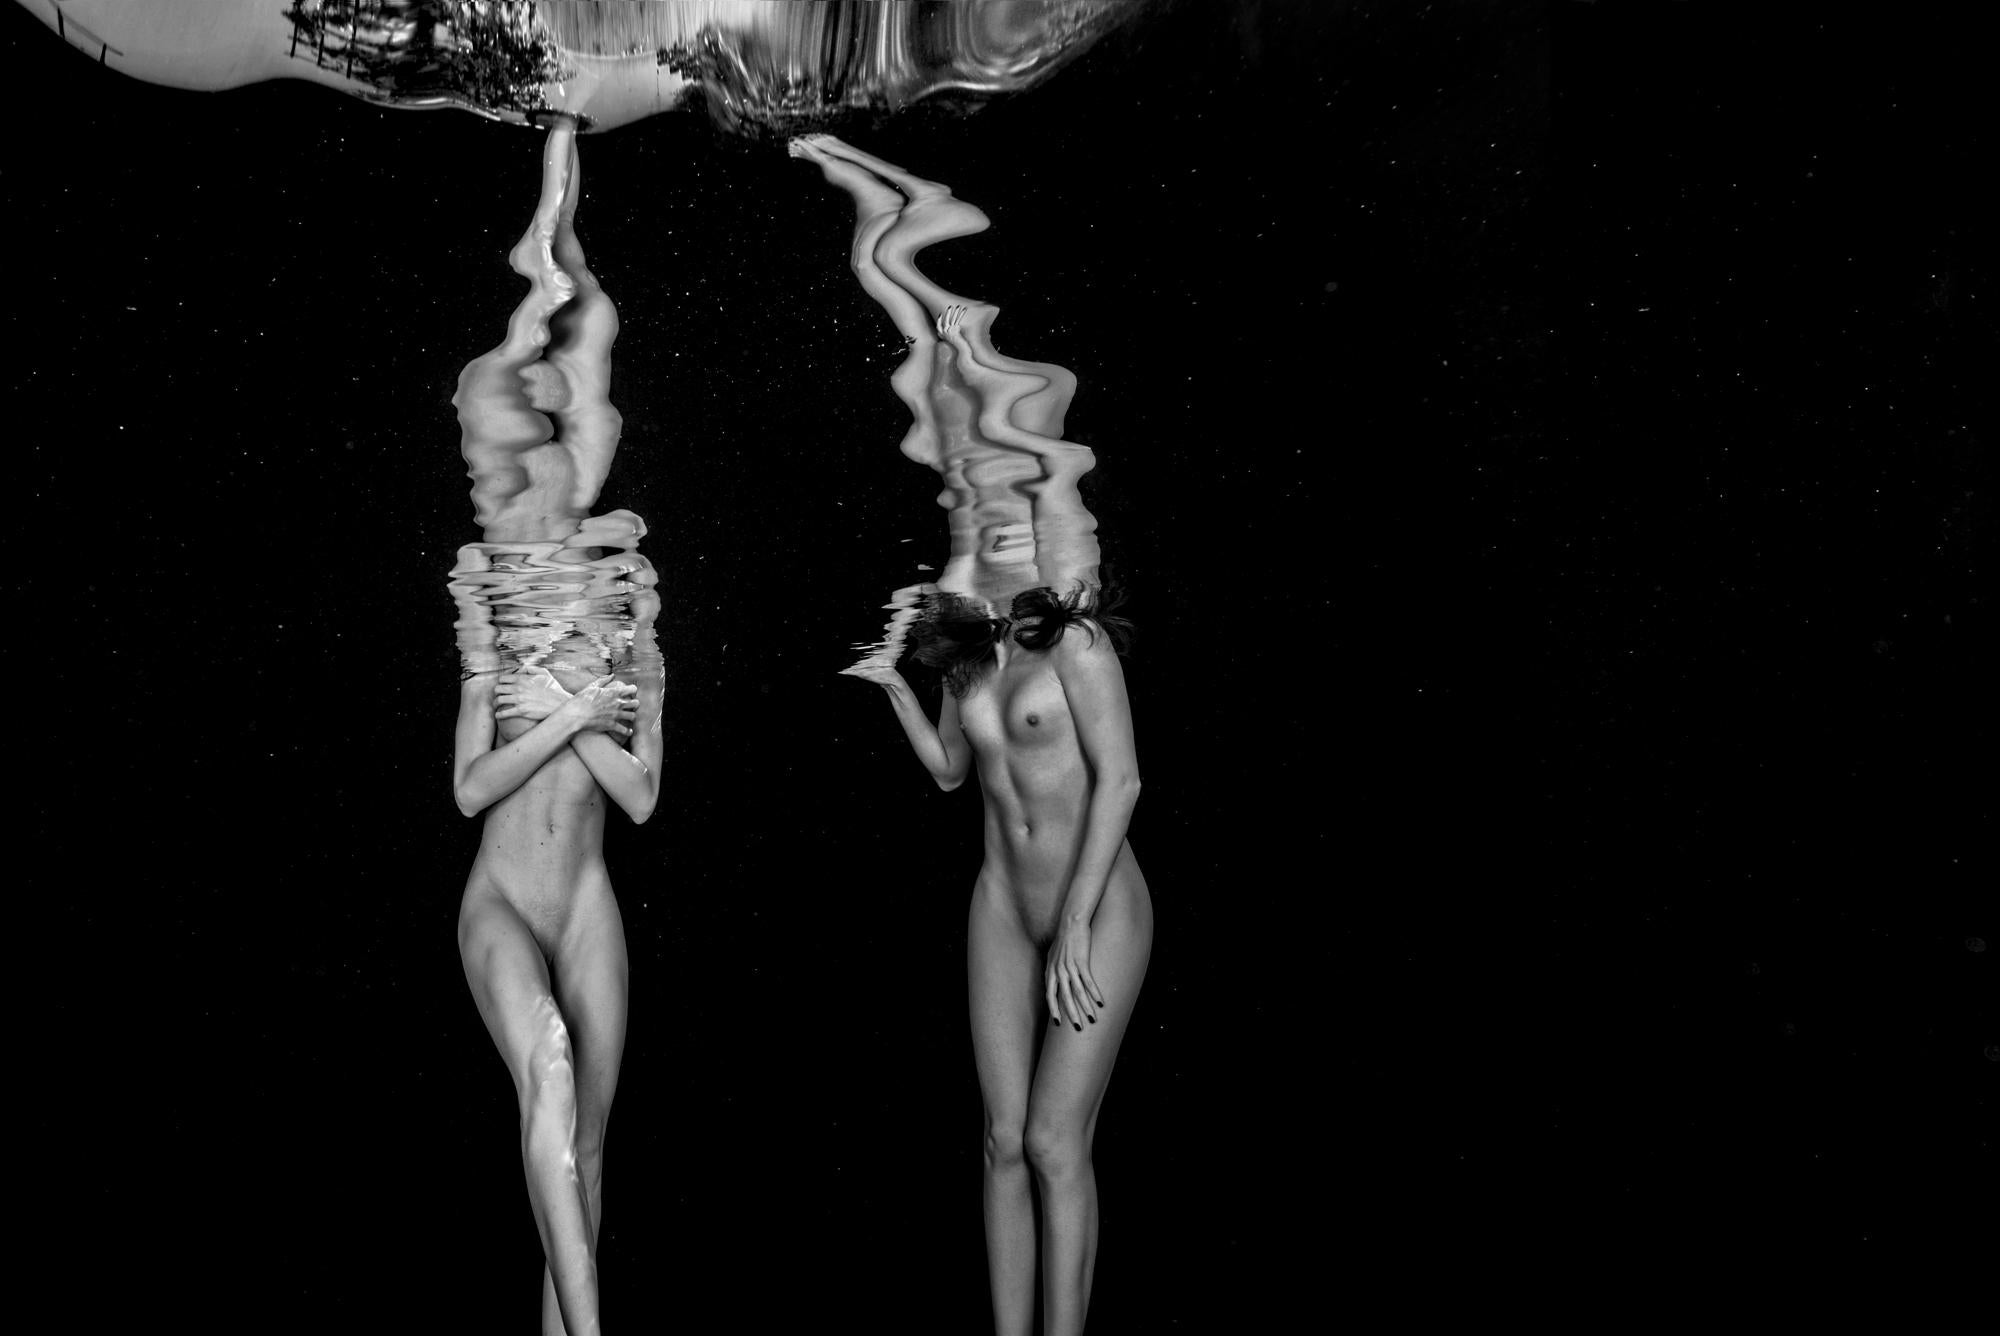 Alex Sher Black and White Photograph - Small Talk - underwater black & white nude photograph - archival pigment 43x64"